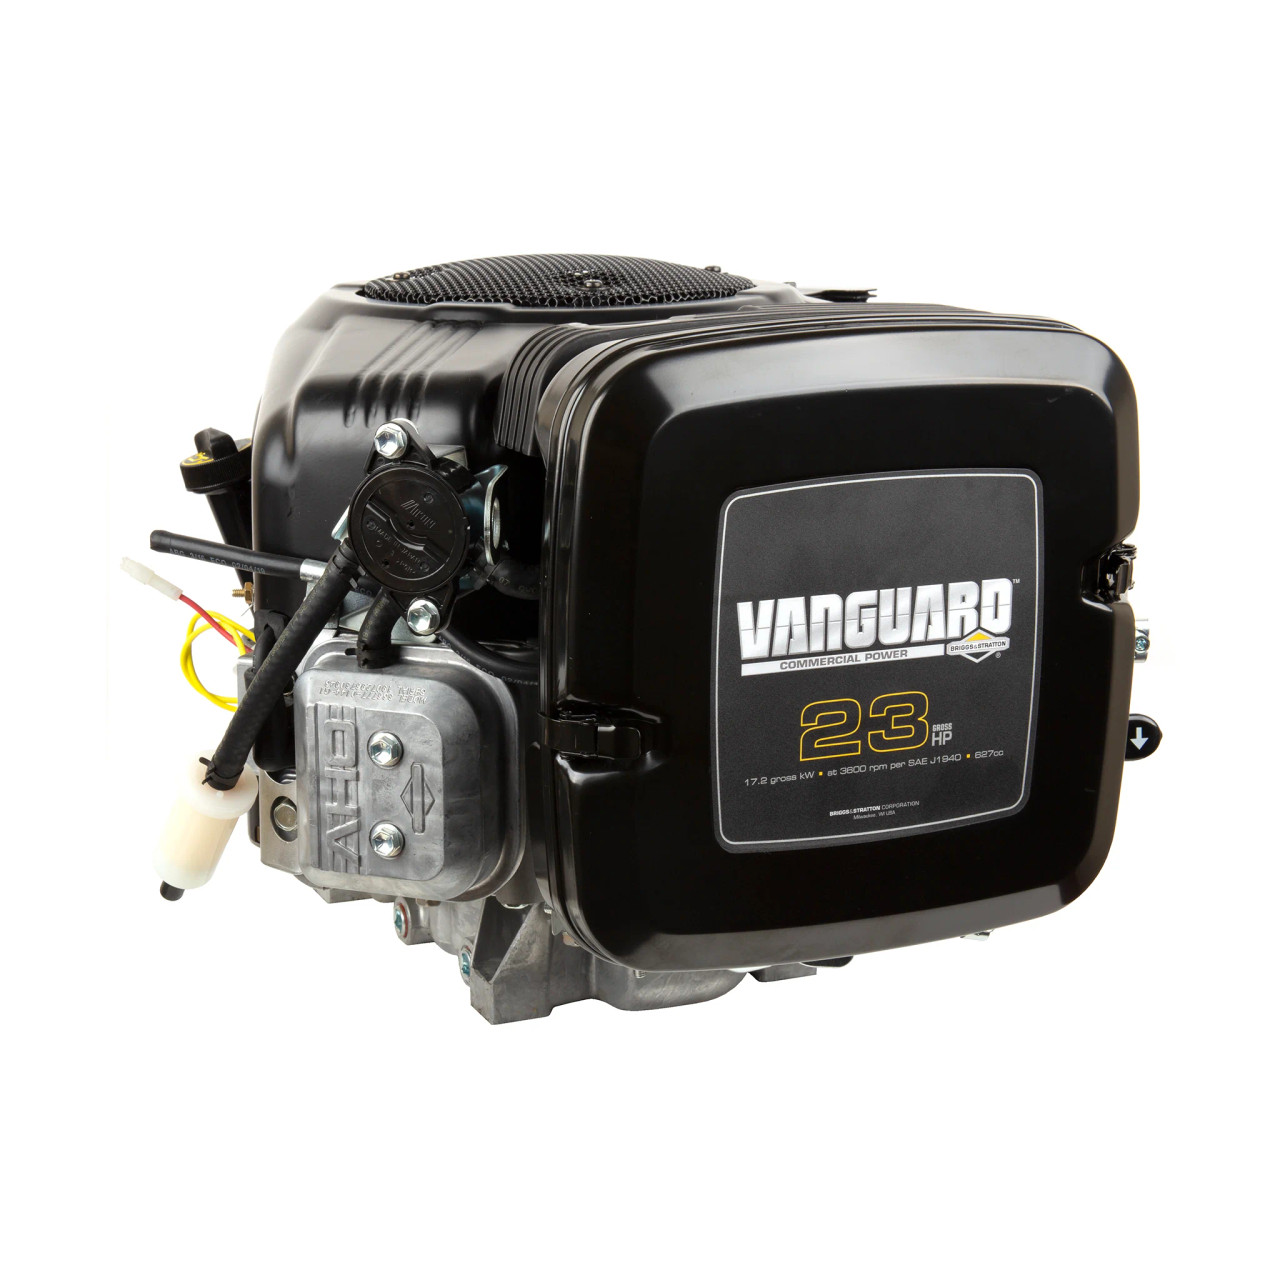 Vanguard 23.0 HP 627cc Vertical Shaft Engine 386777-0144-G1